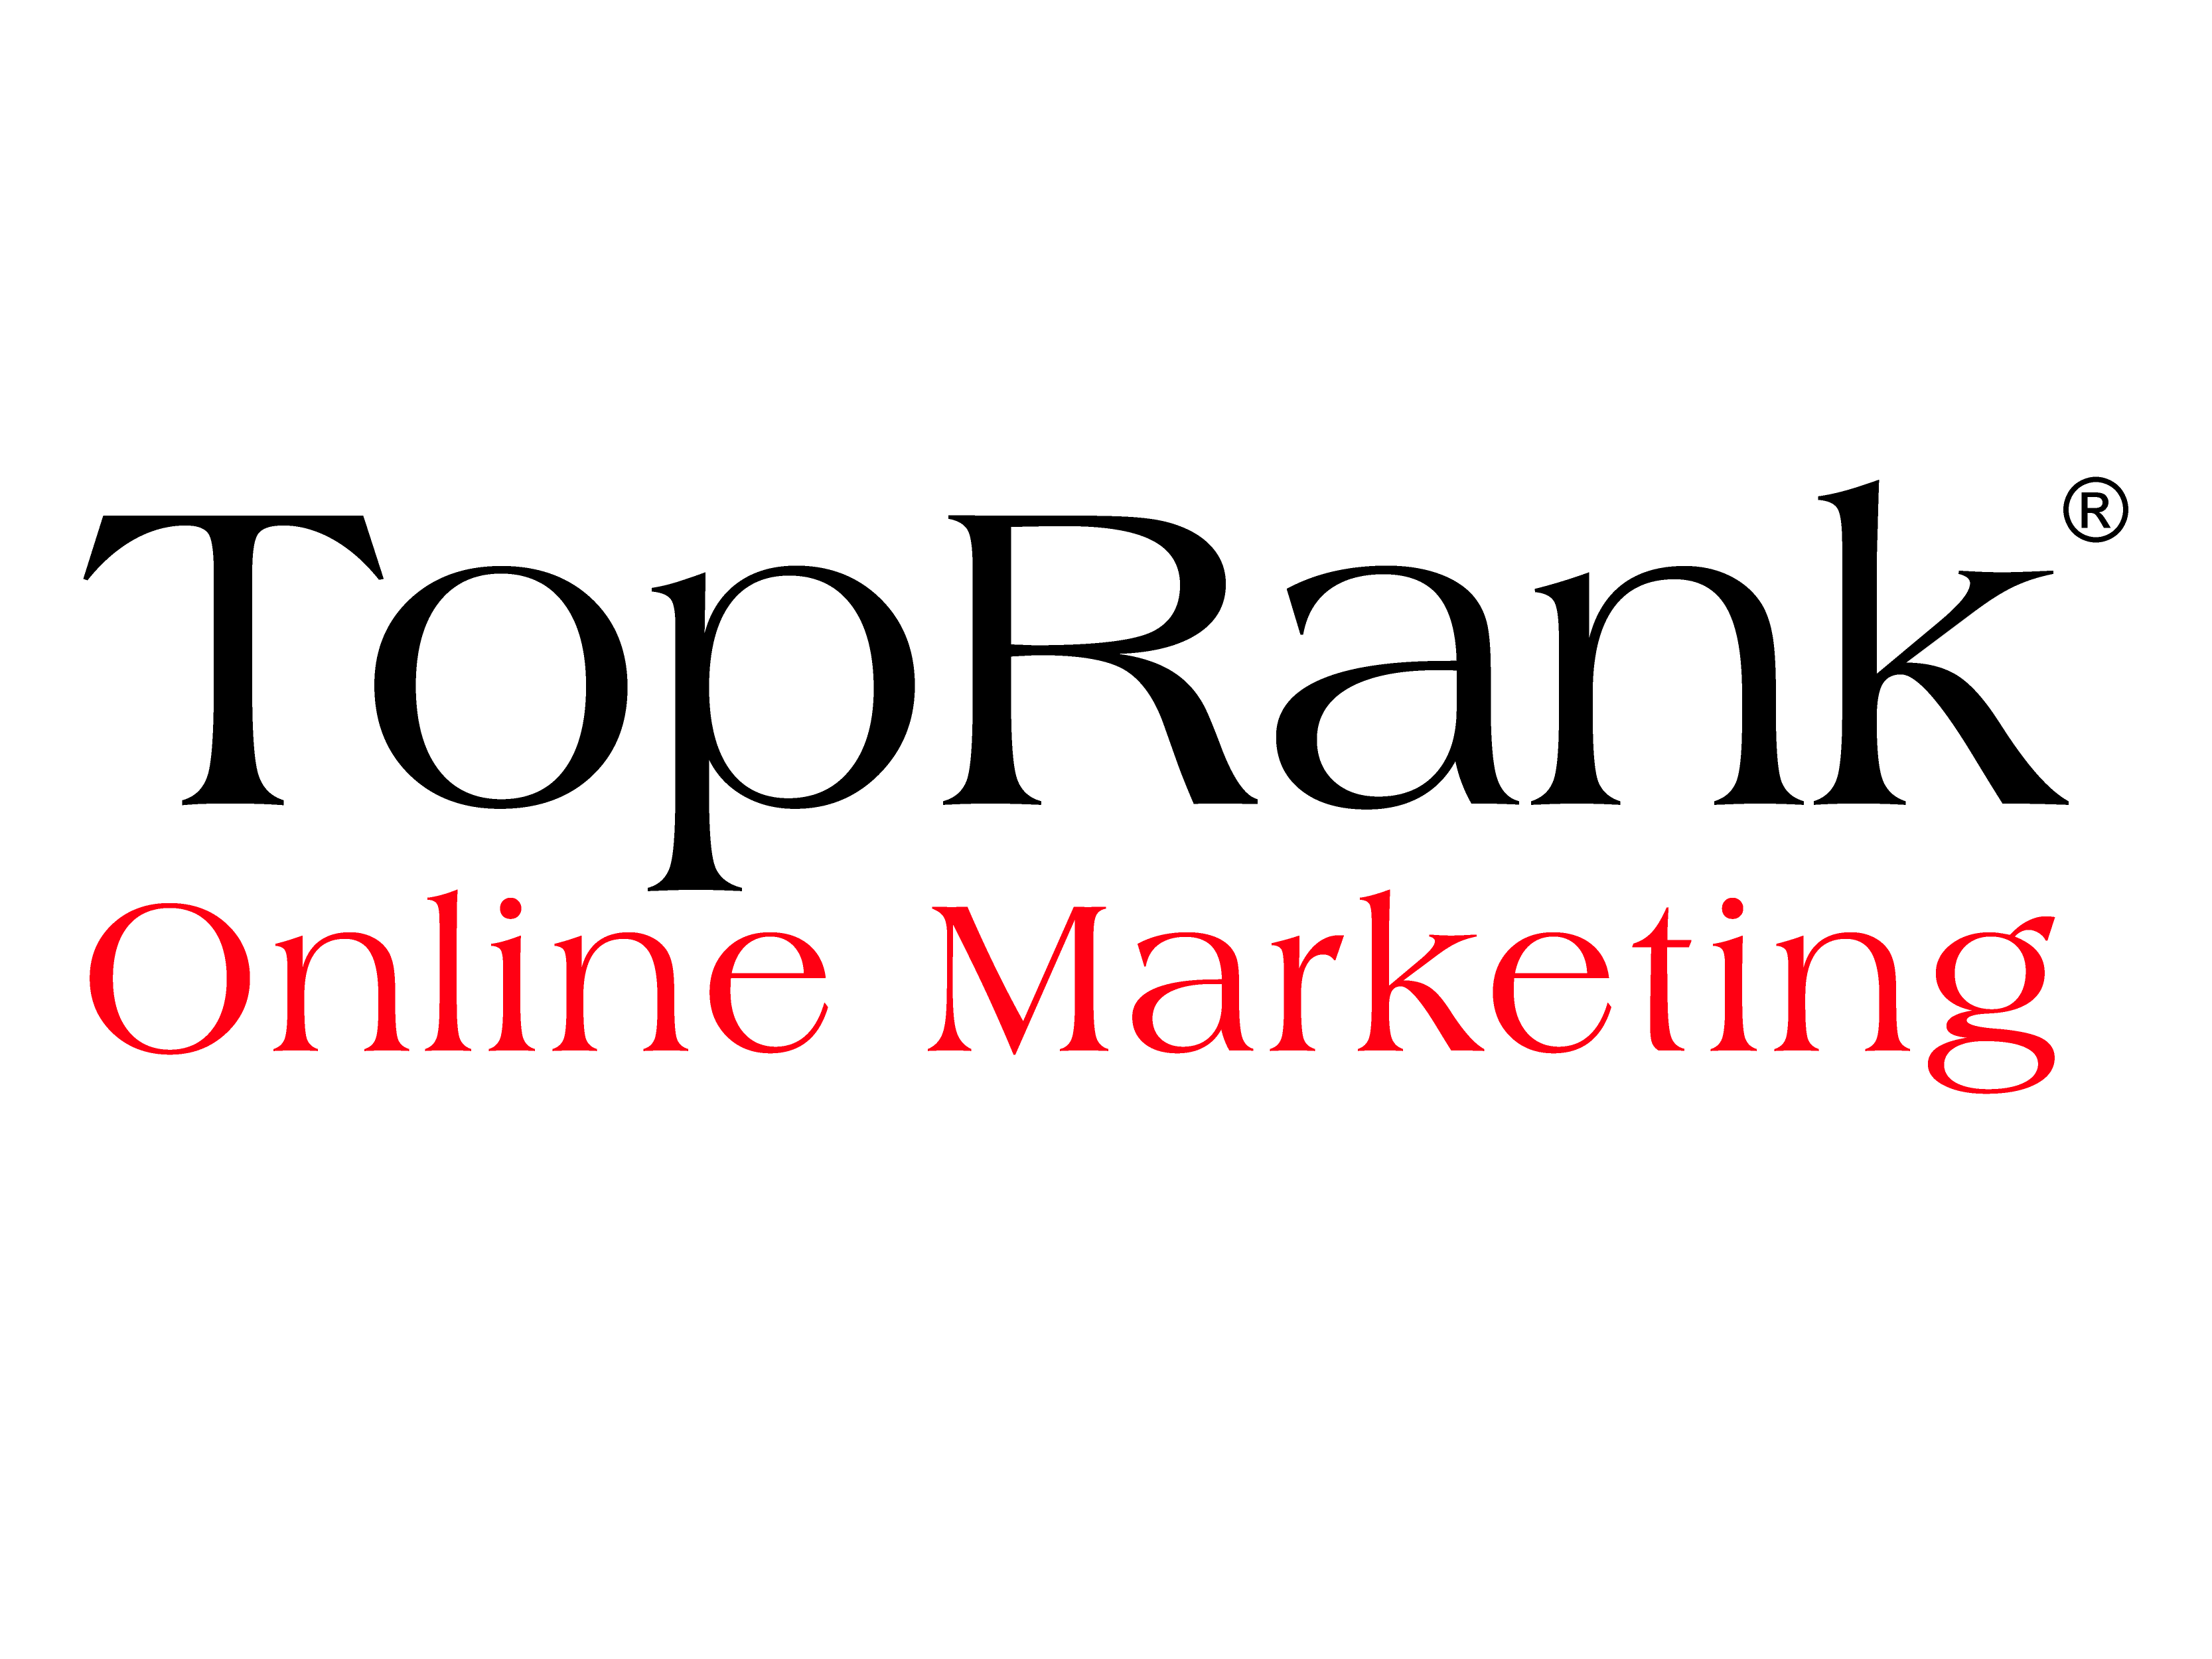 Search Engine Strategies Archives - Online Marketing Blog - TopRank®